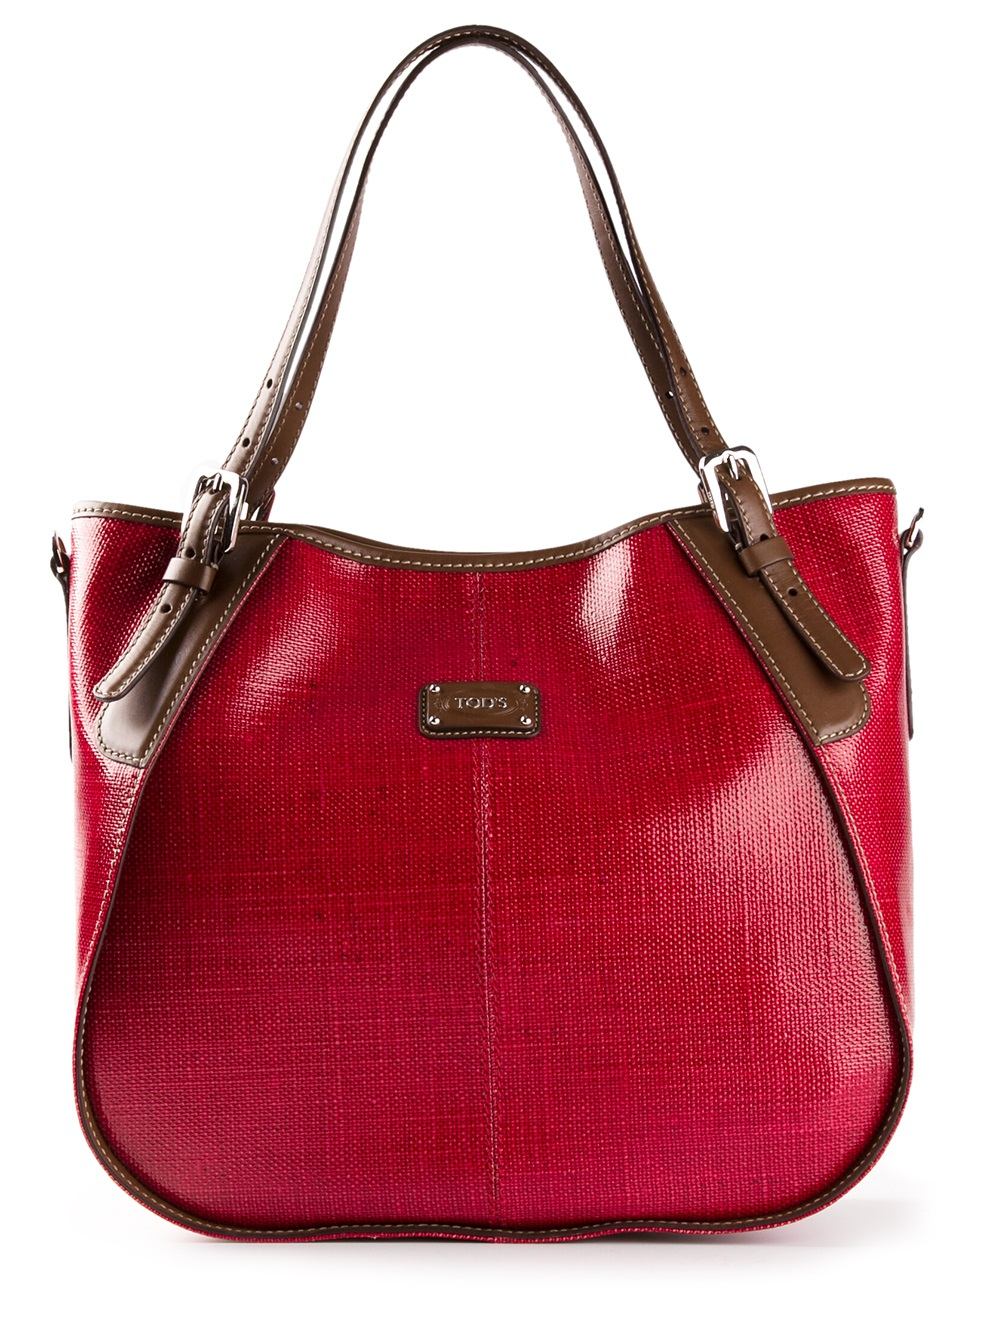 Lyst - Tod'S Gline Medium Shopping Bag in Pink